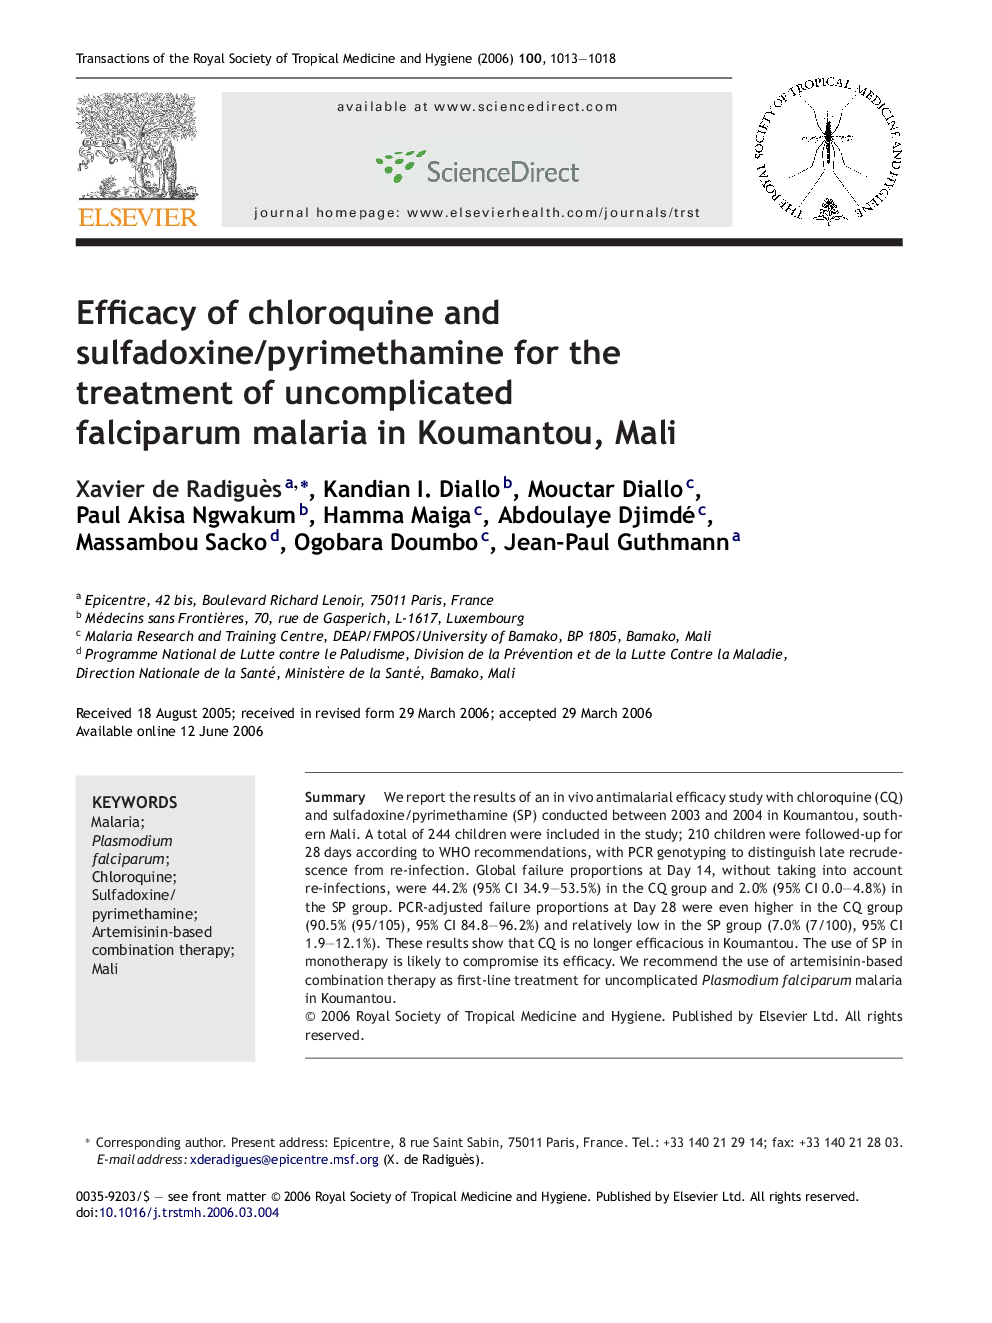 Efficacy of chloroquine and sulfadoxine/pyrimethamine for the treatment of uncomplicated falciparum malaria in Koumantou, Mali